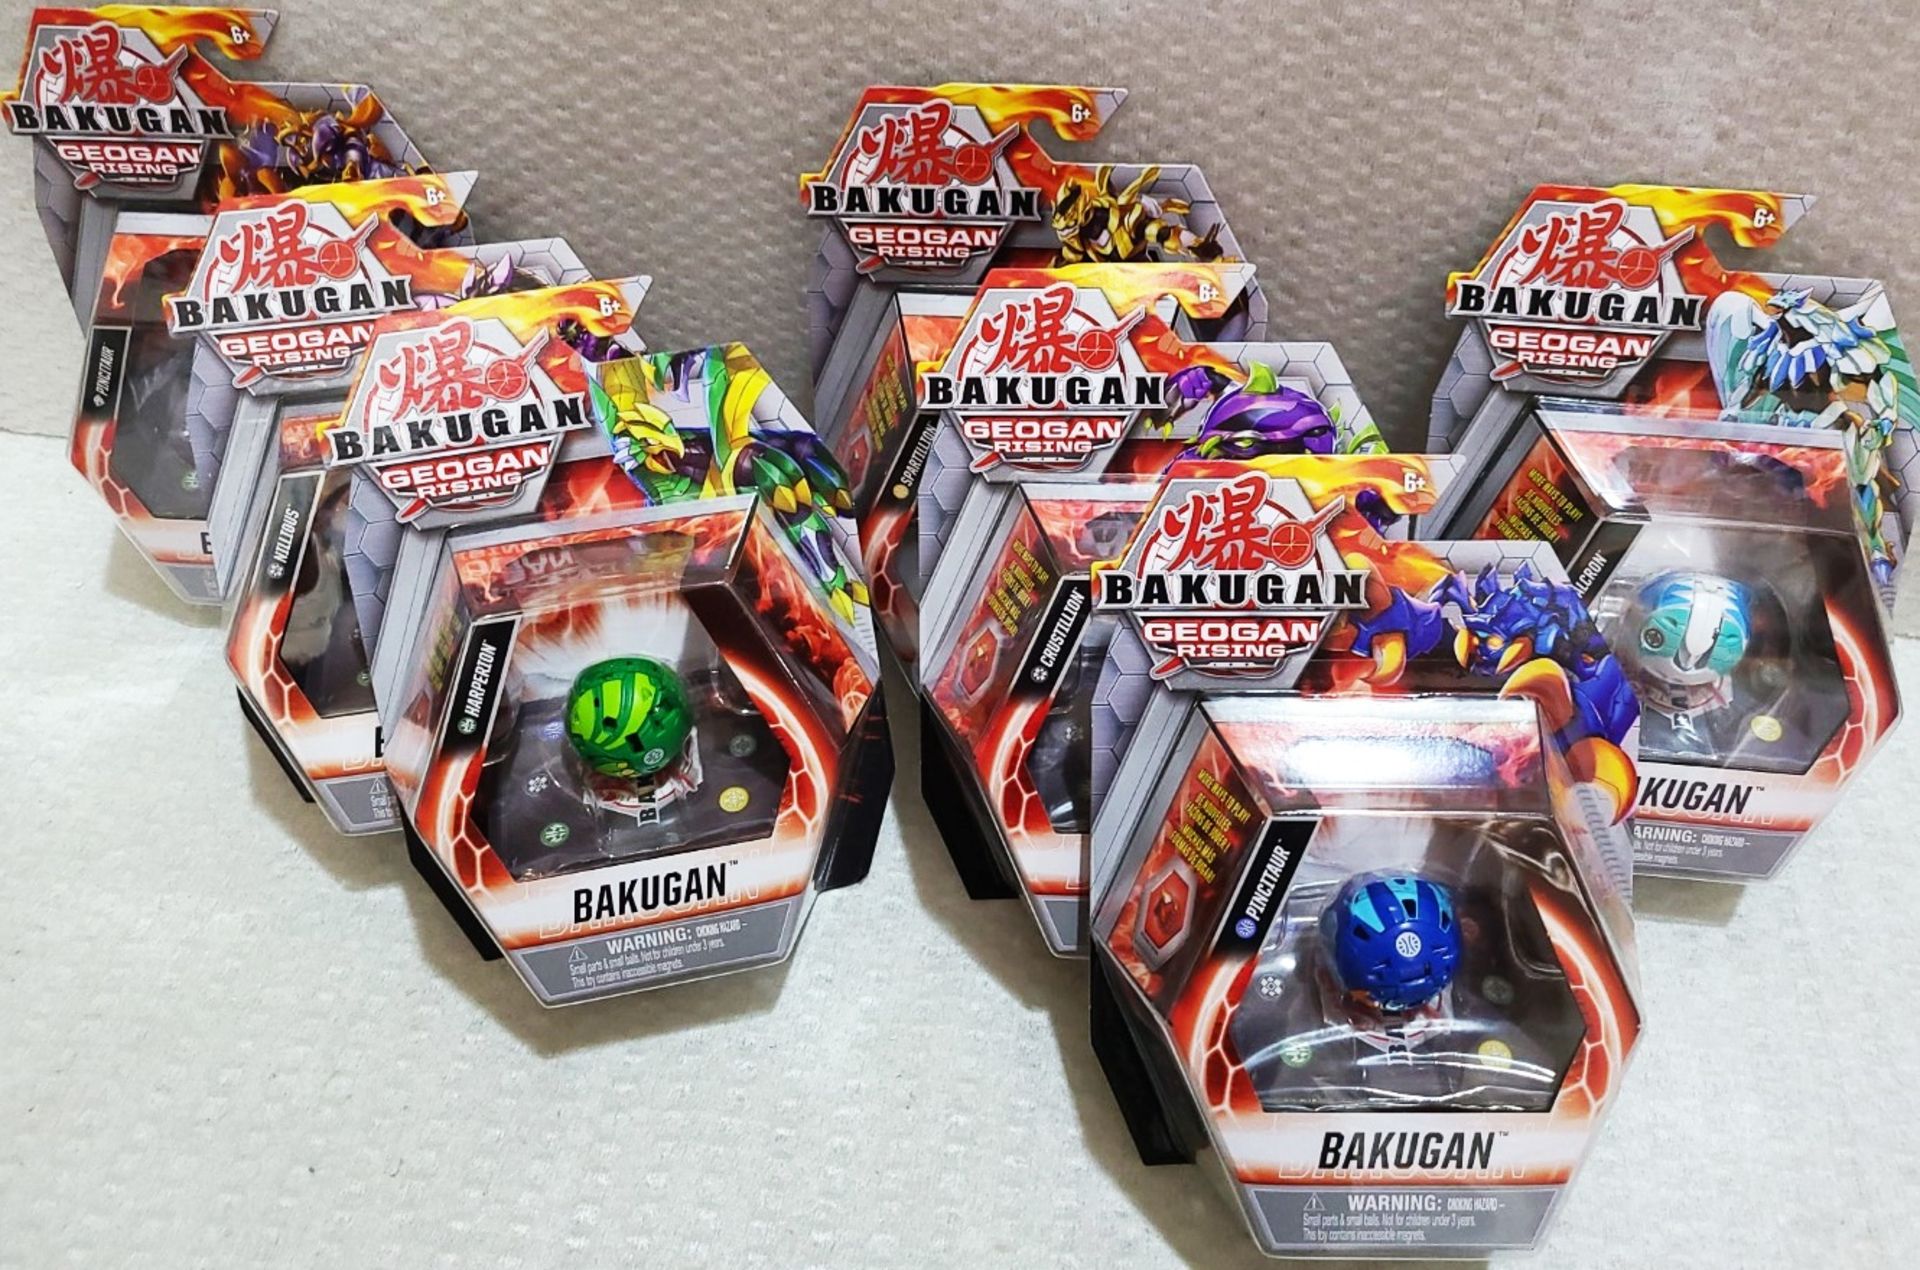 7 x BAKUGAN Bakugan Geogan Rising - Core Collectible Action Figures